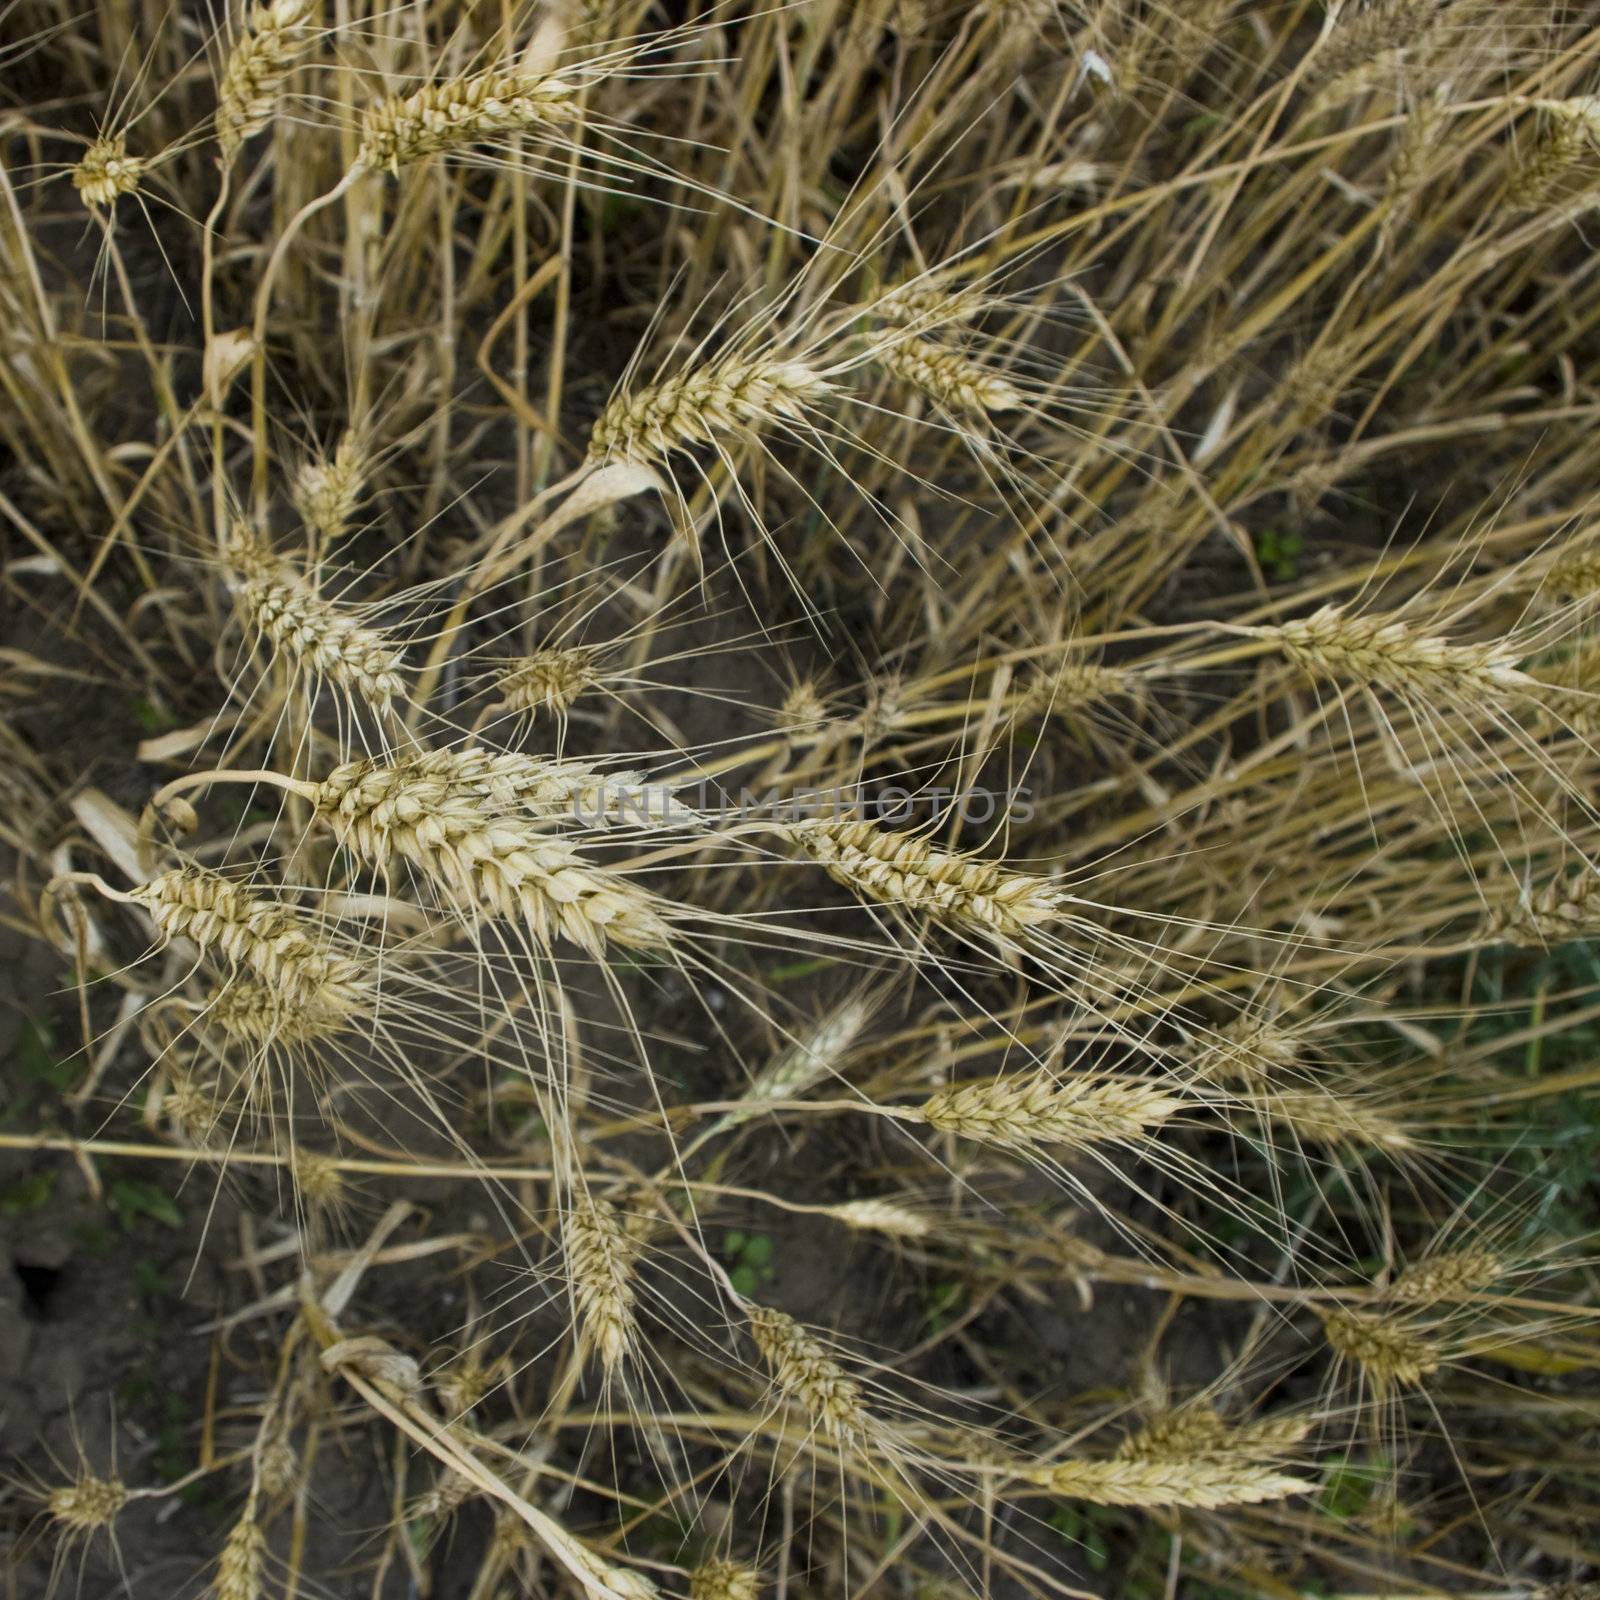 Ripe wheat by photo4dreams